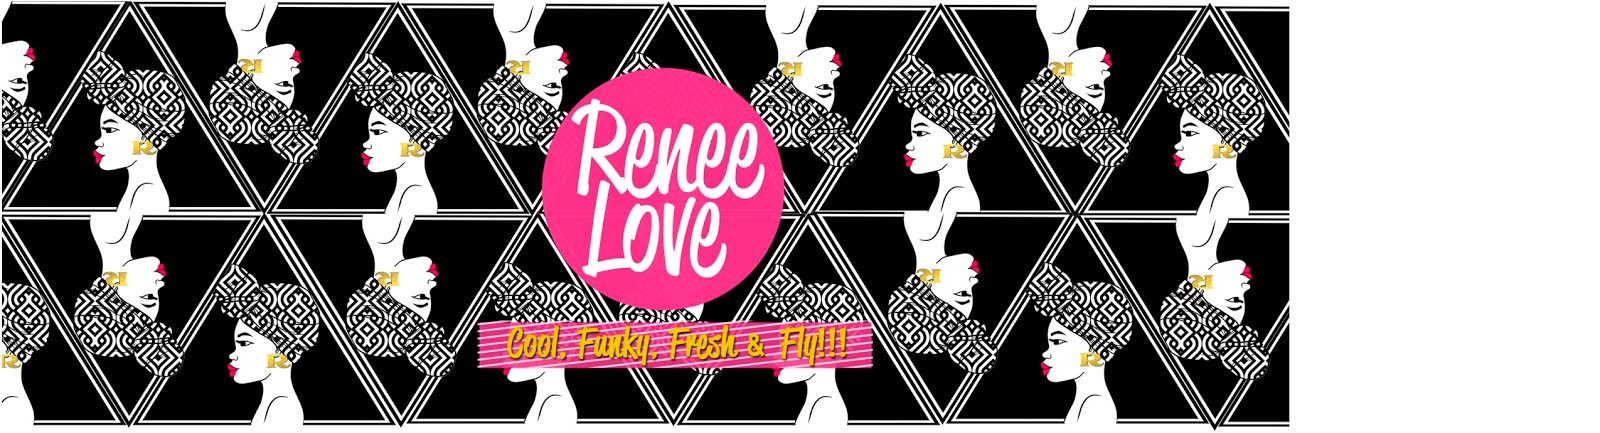 Renee Love and Co.